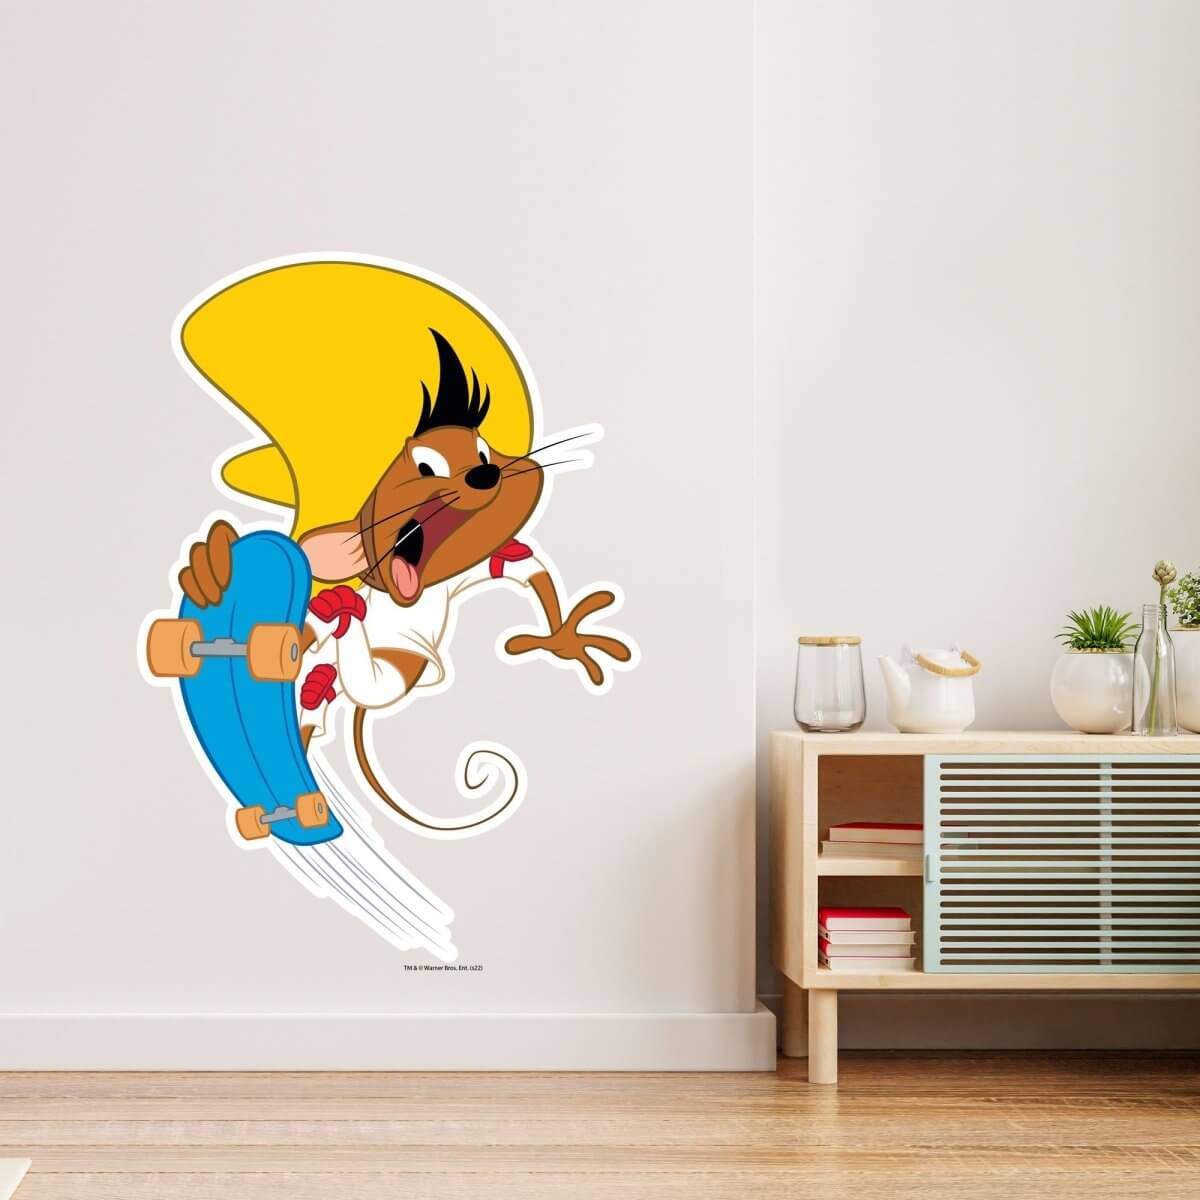 Kismet Decals Looney Tunes Speedy on Skateboard Licensed Wall Sticker - Easy DIY Home & Kids Room Decor Wall Decal Art - Kismet Decals